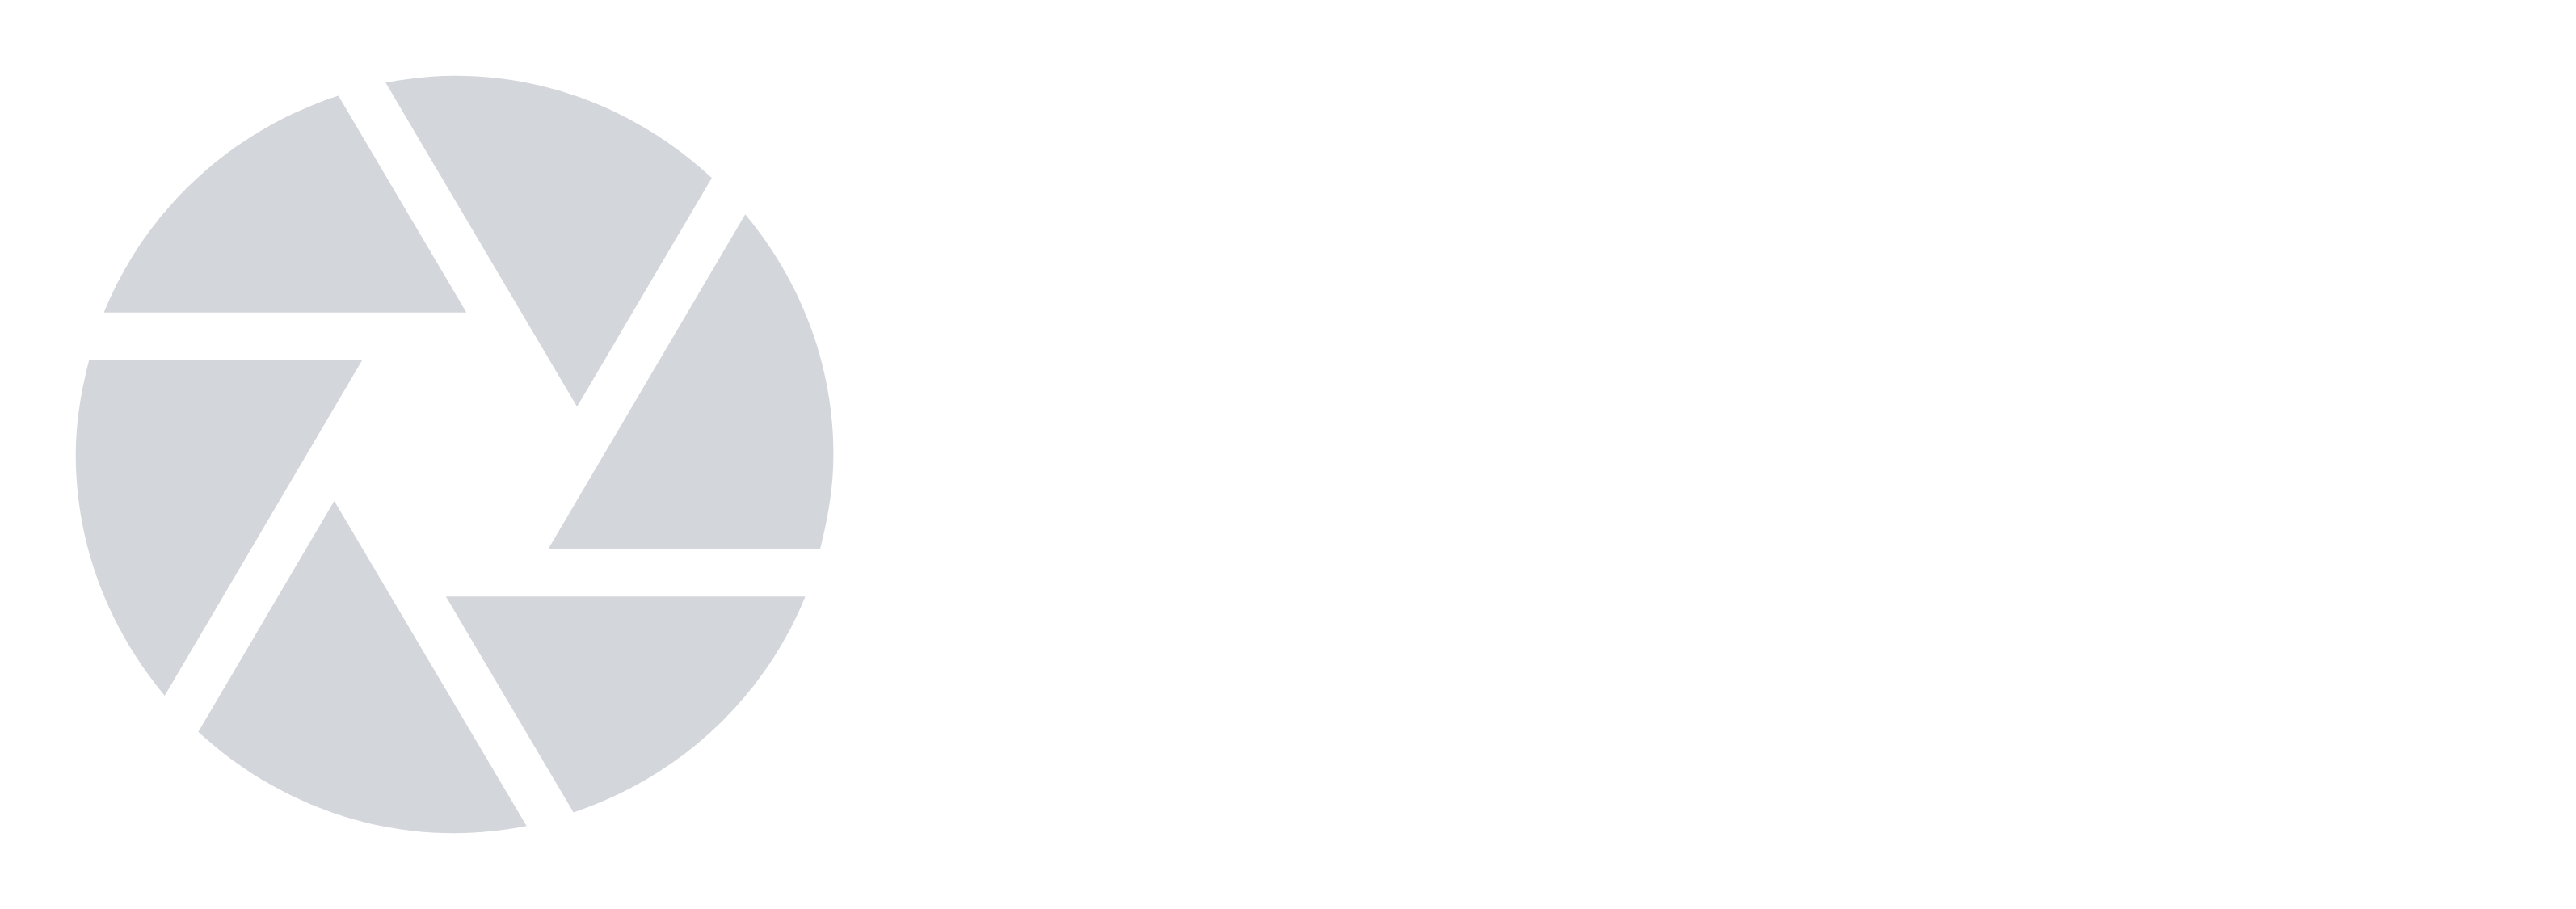 Arbury Labs Logo